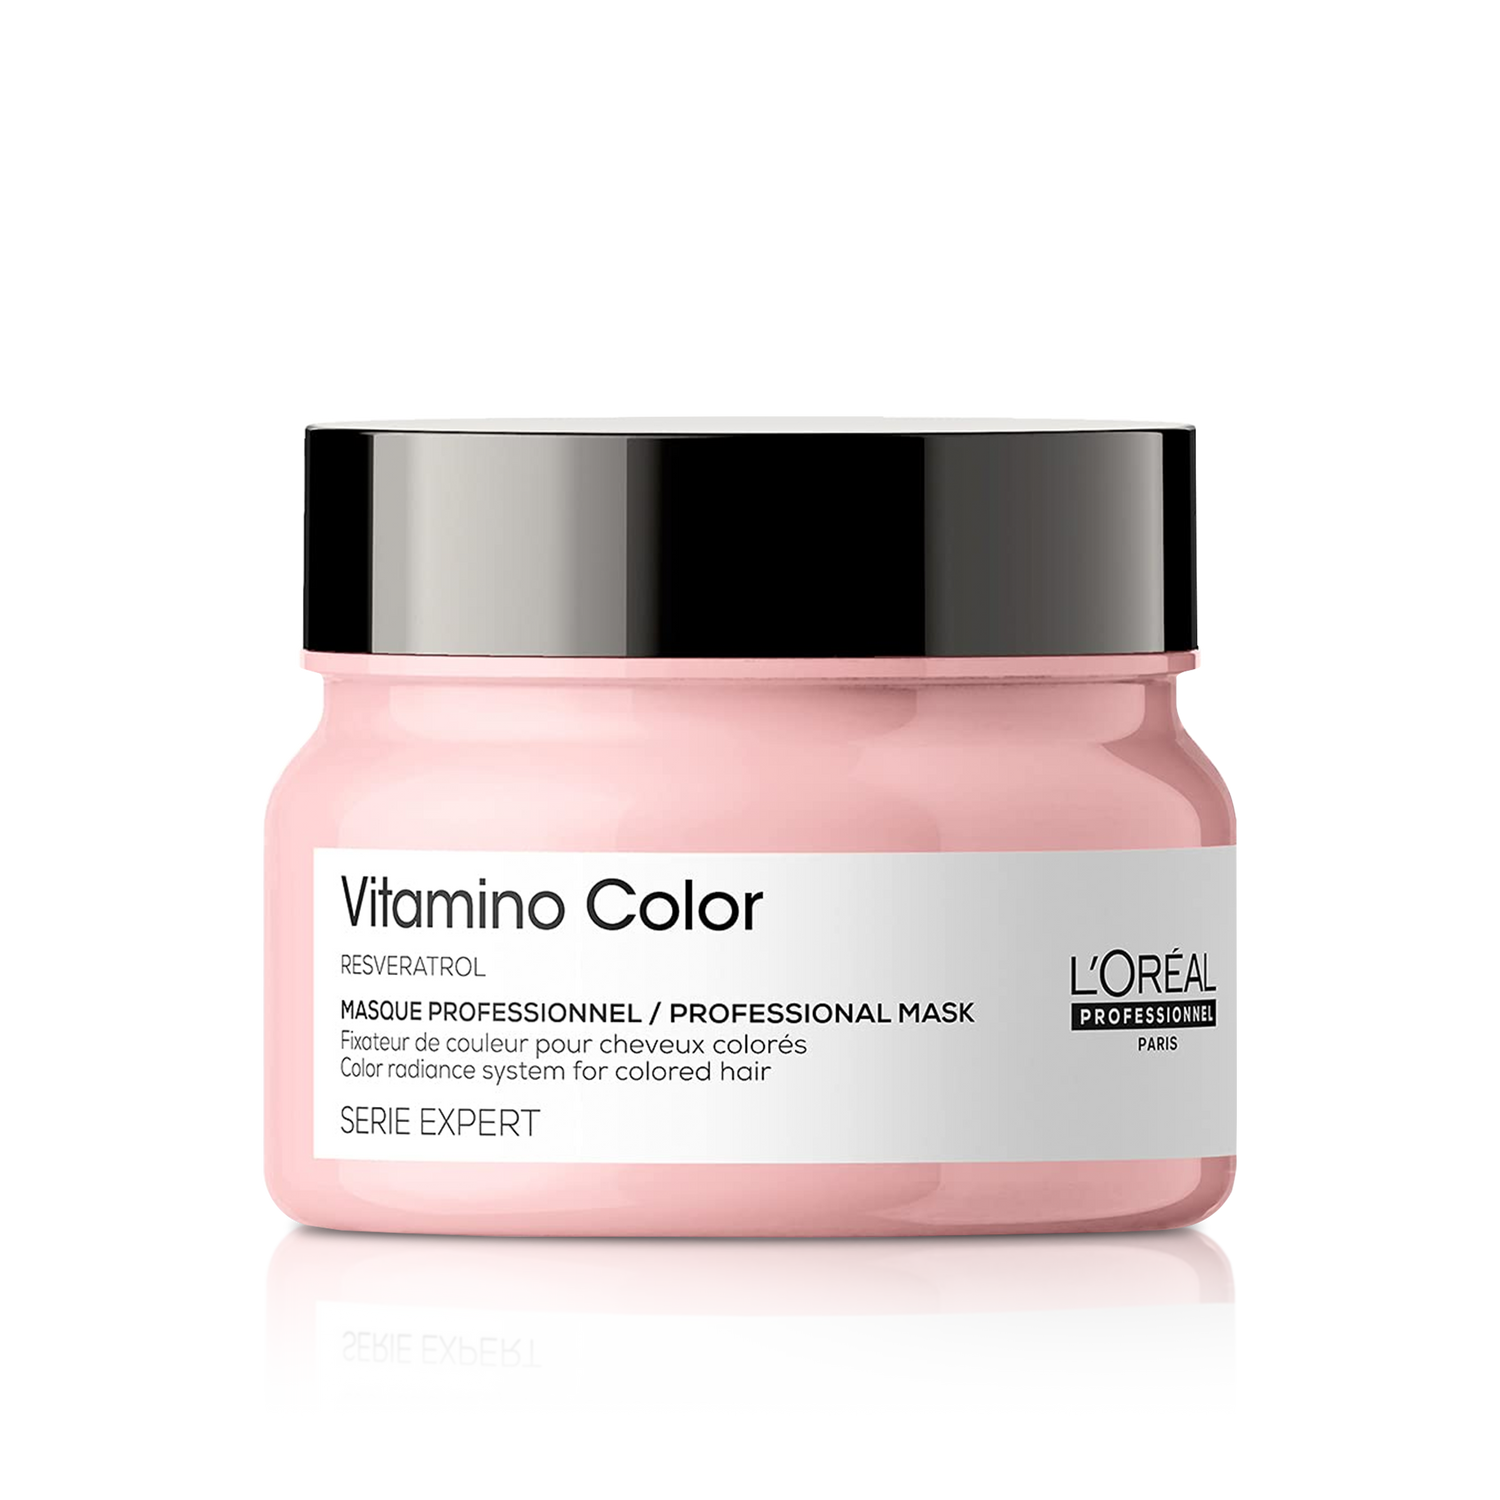 Vitamino Color A-Ox Color Radiance Masque